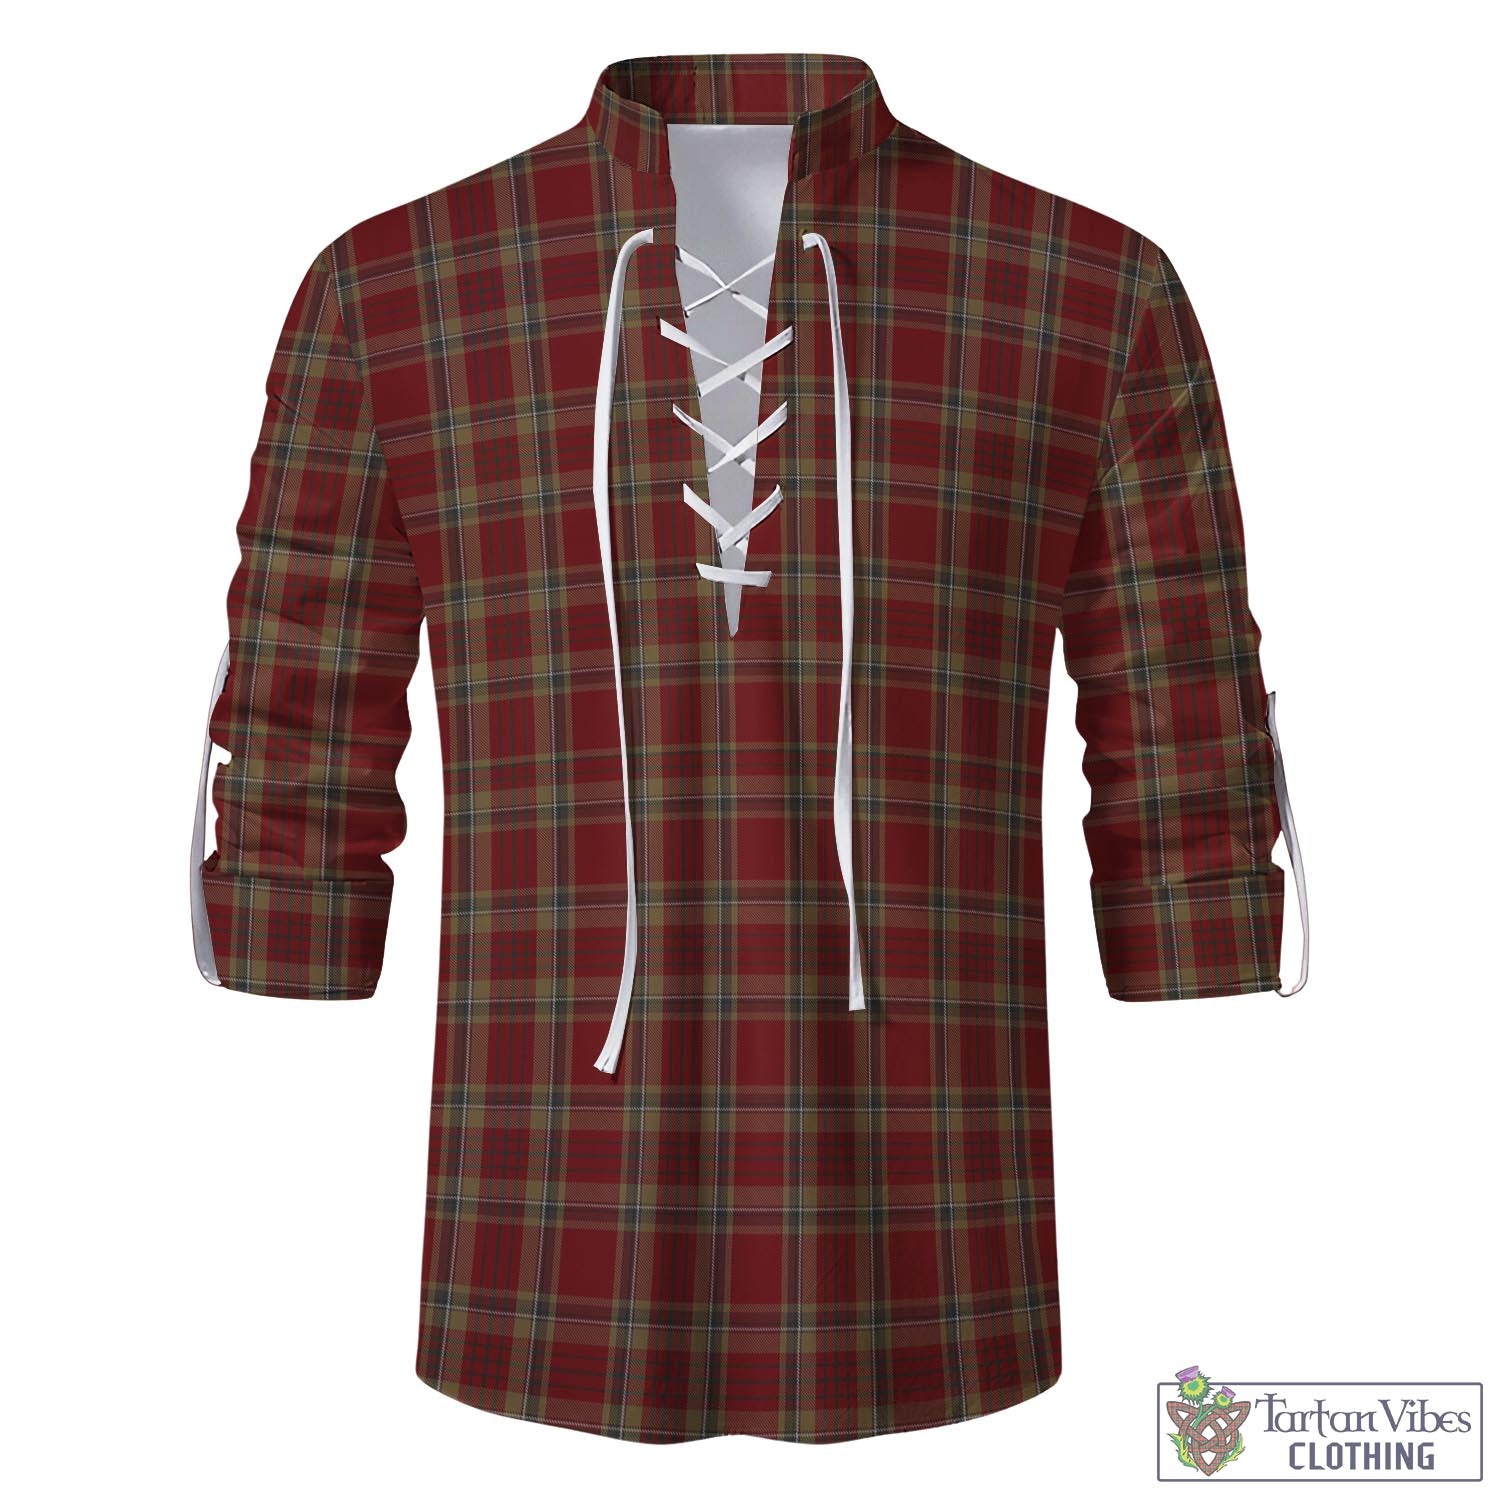 Tartan Vibes Clothing Tyrone County Ireland Tartan Men's Scottish Traditional Jacobite Ghillie Kilt Shirt